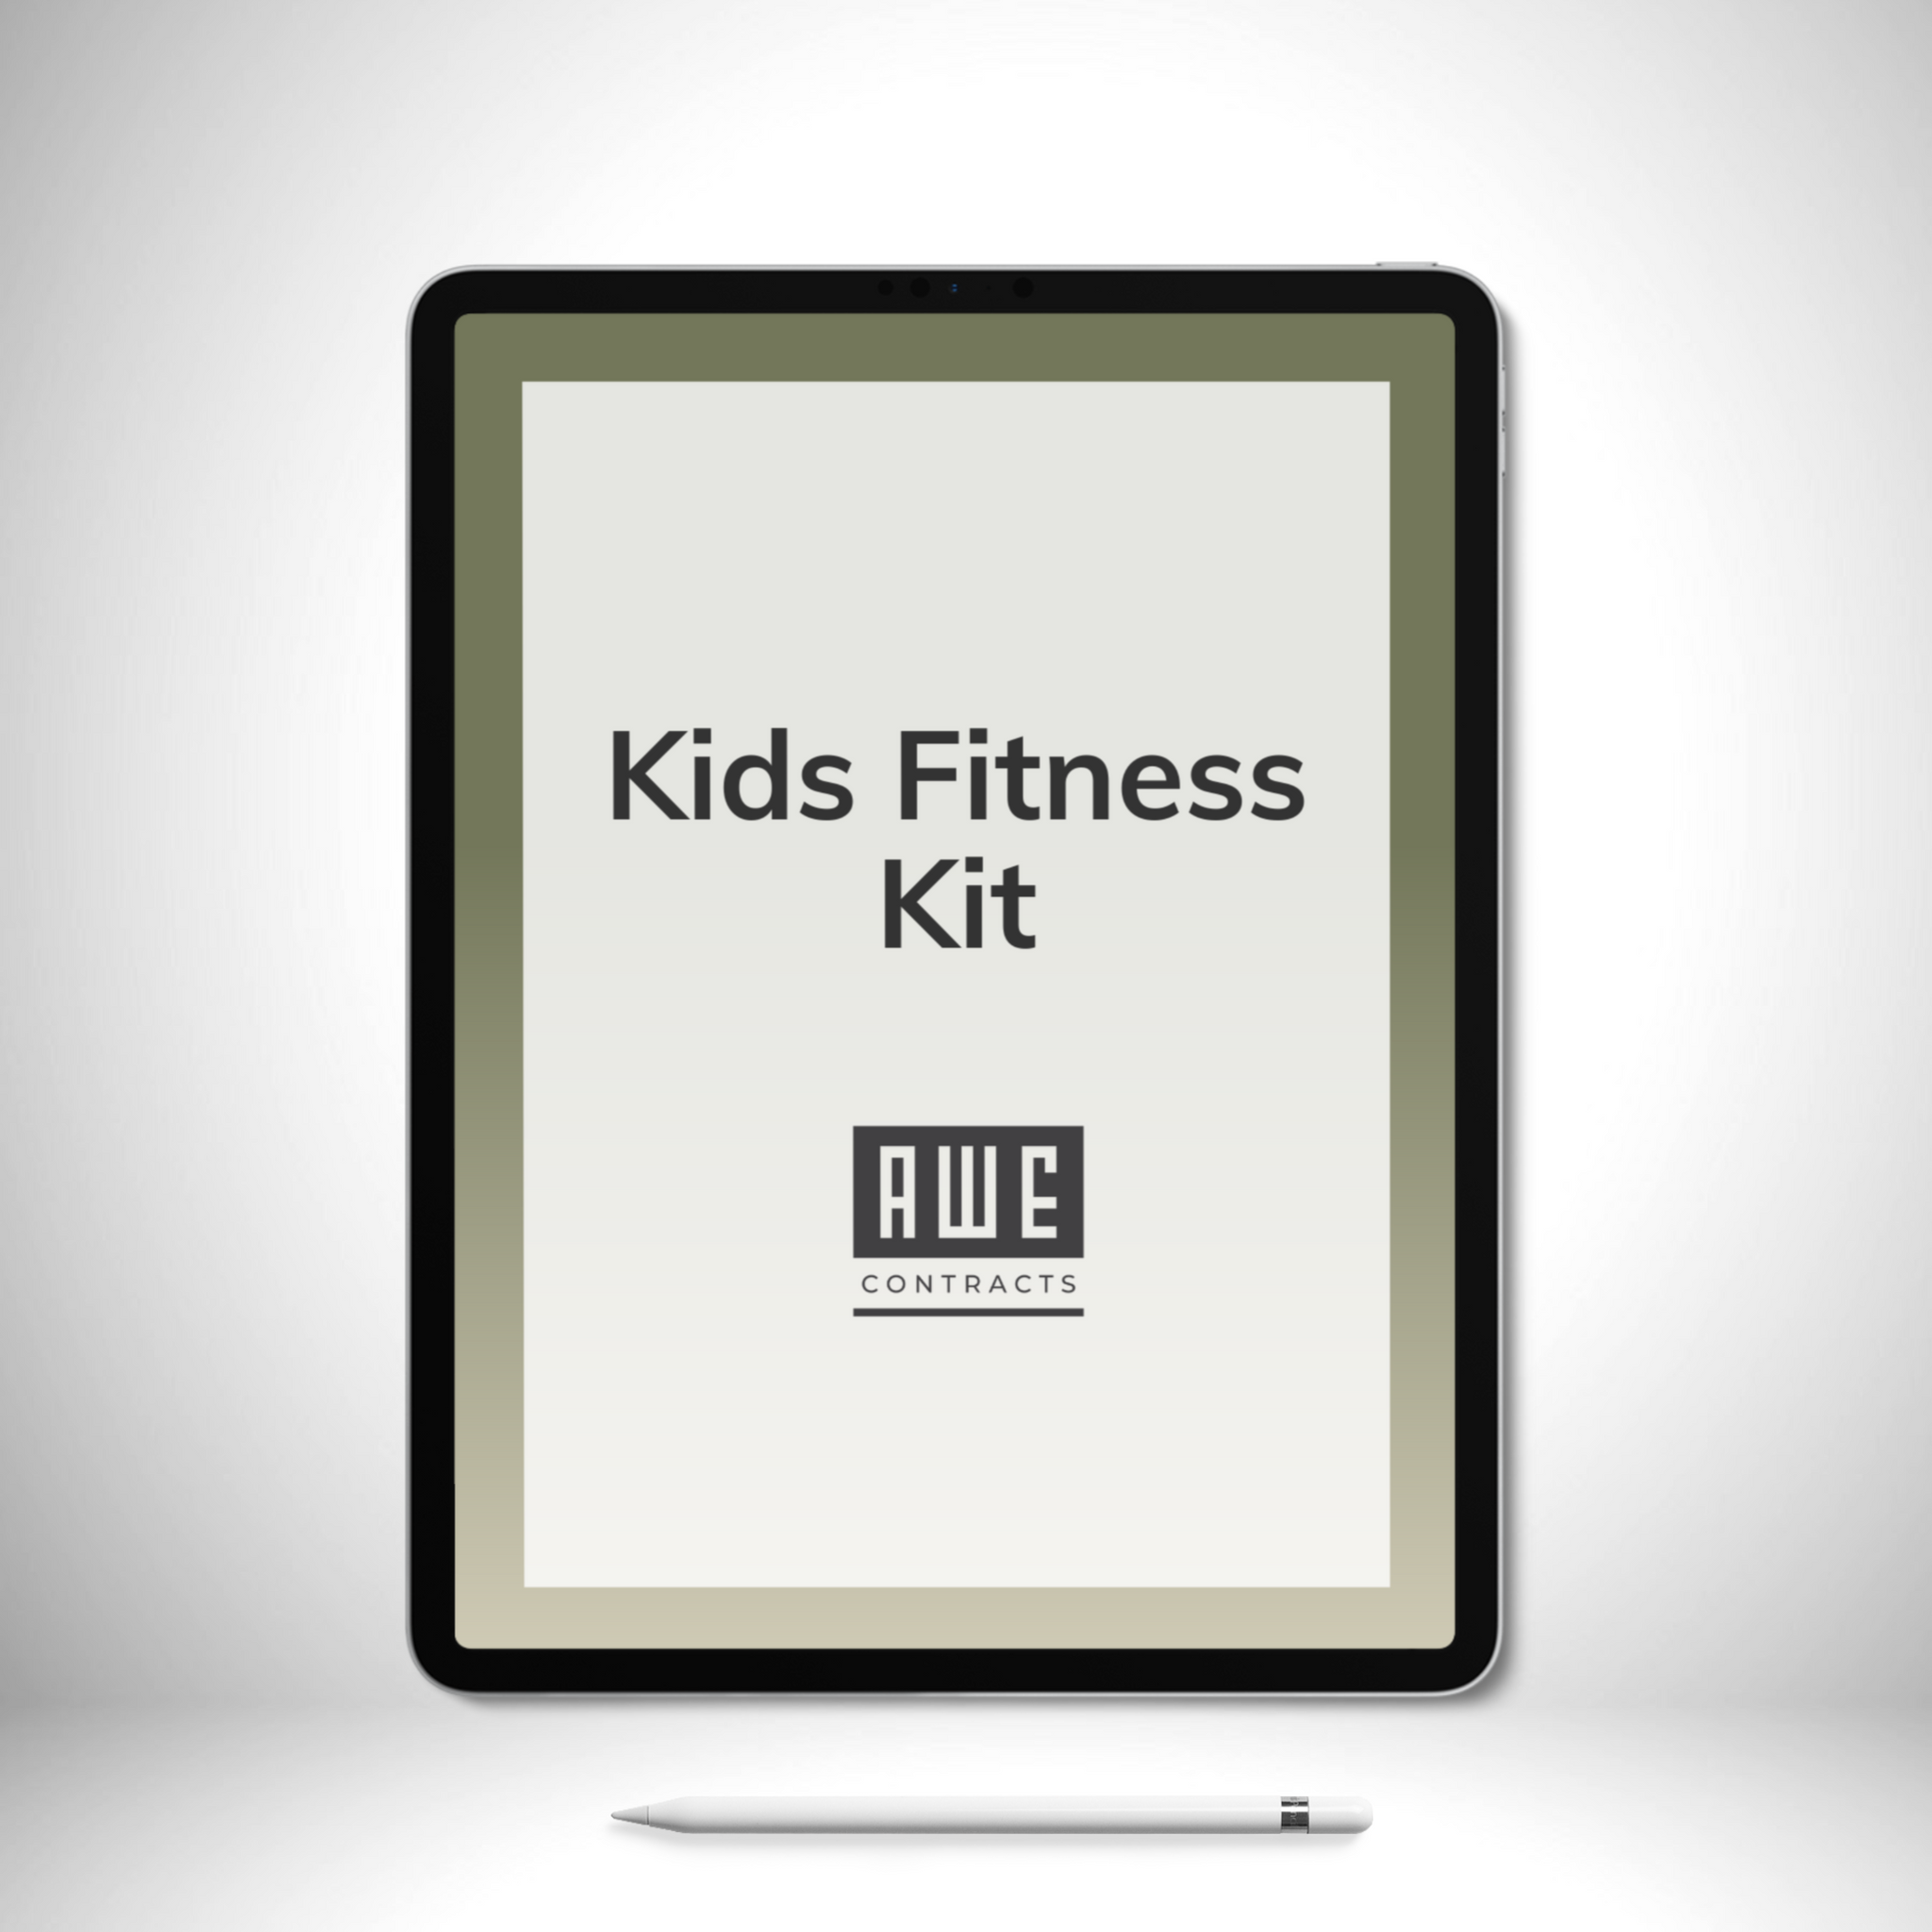 Kids Fitness Kit